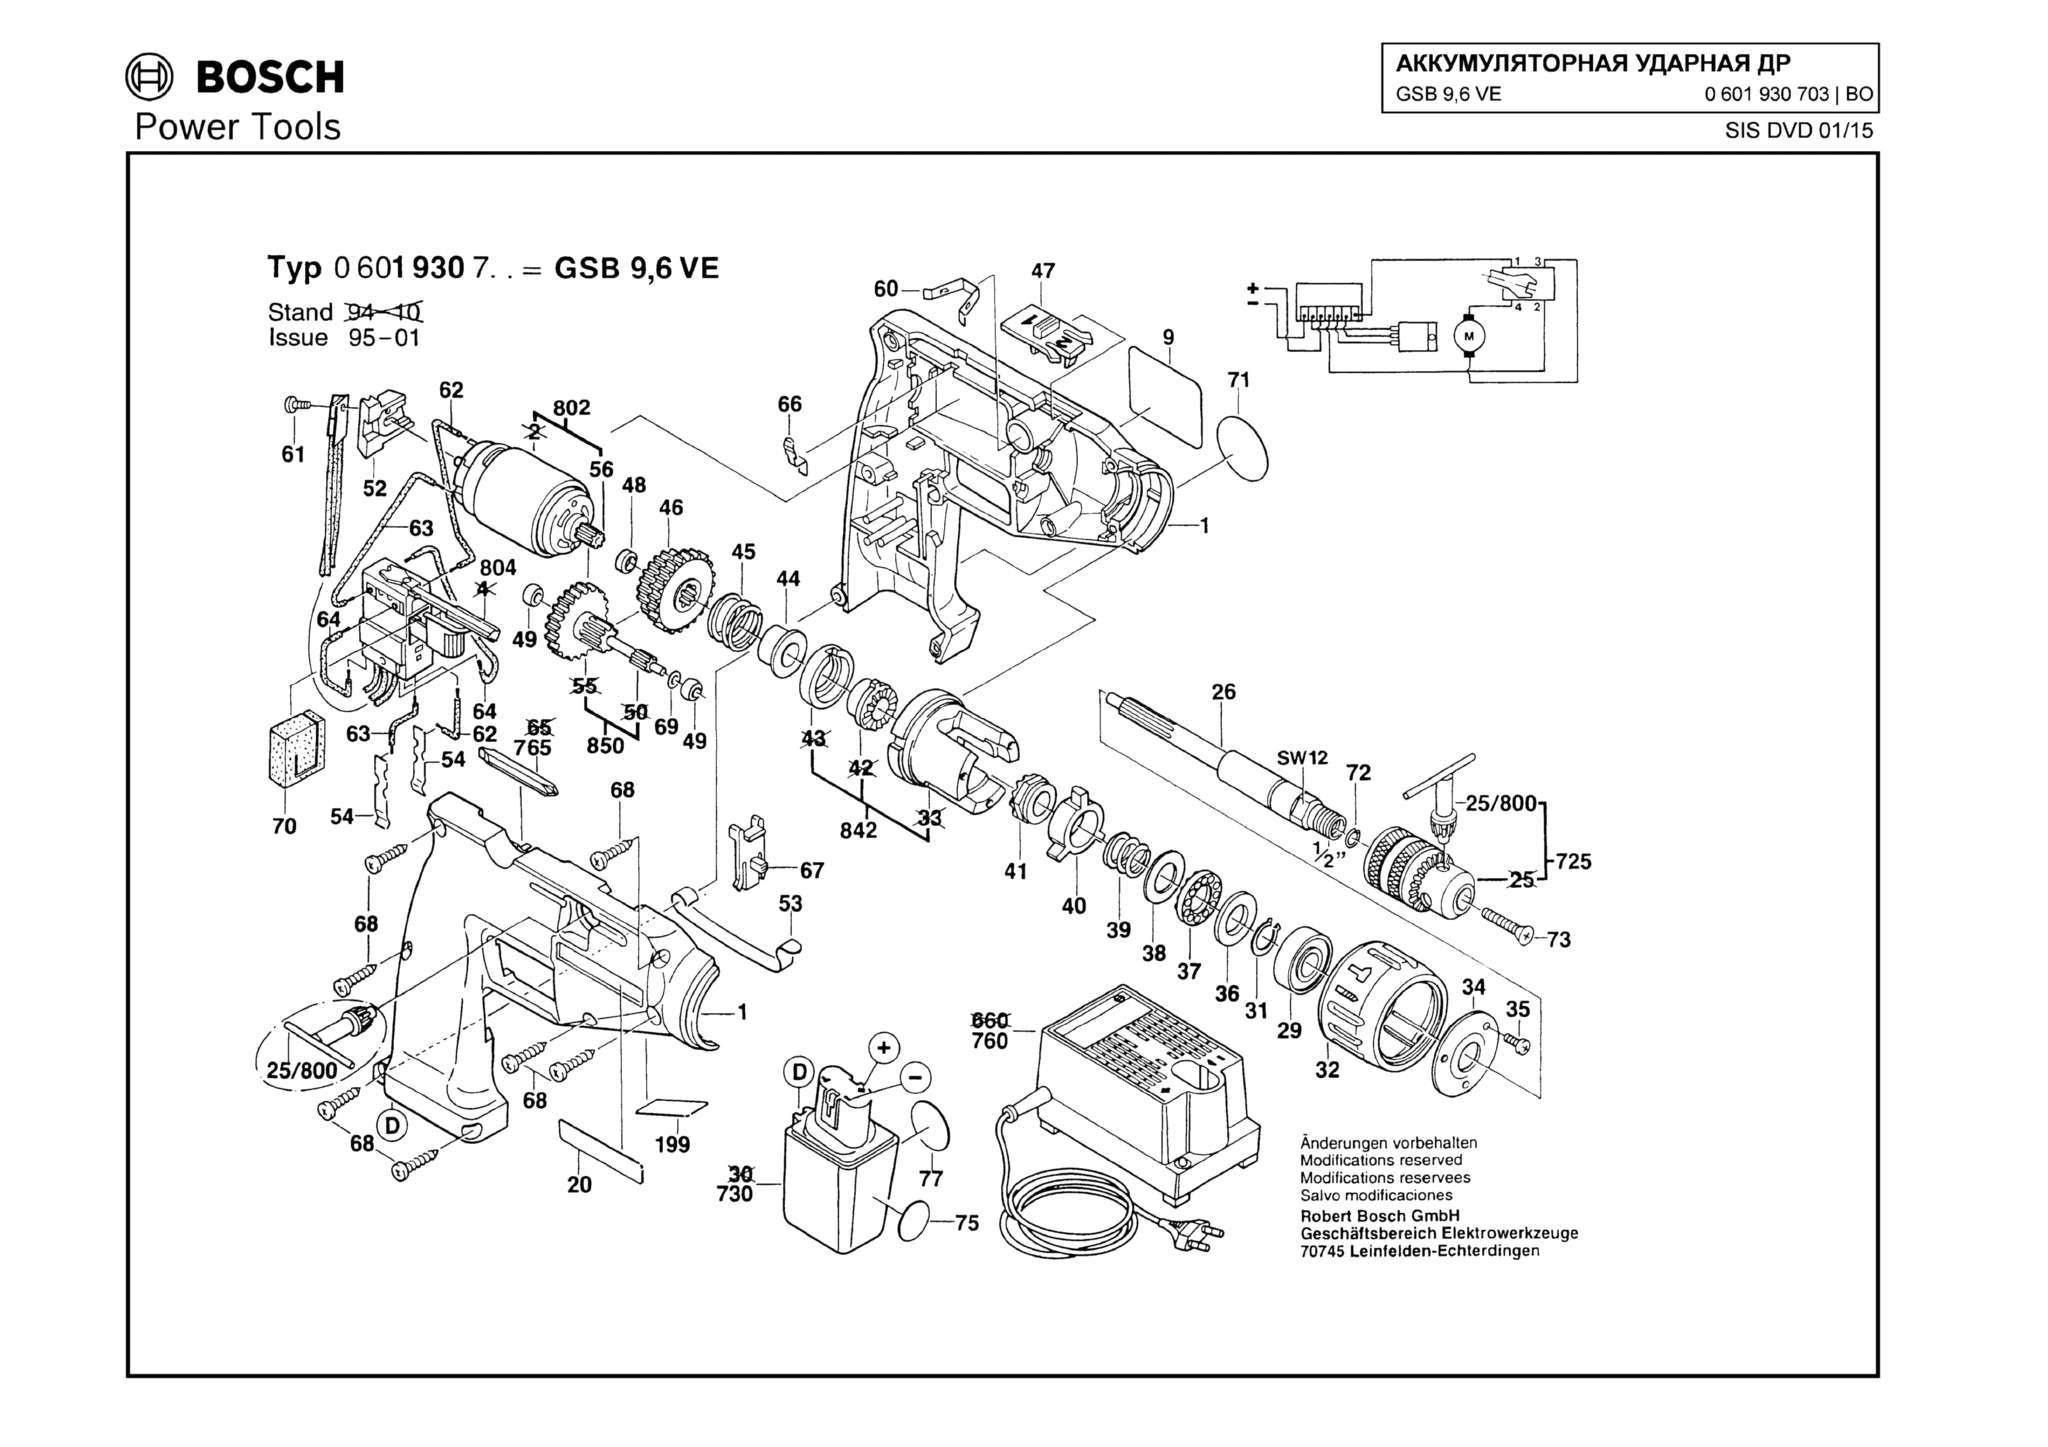 Запчасти, схема и деталировка Bosch GSB 9,6 VE (ТИП 0601930703)